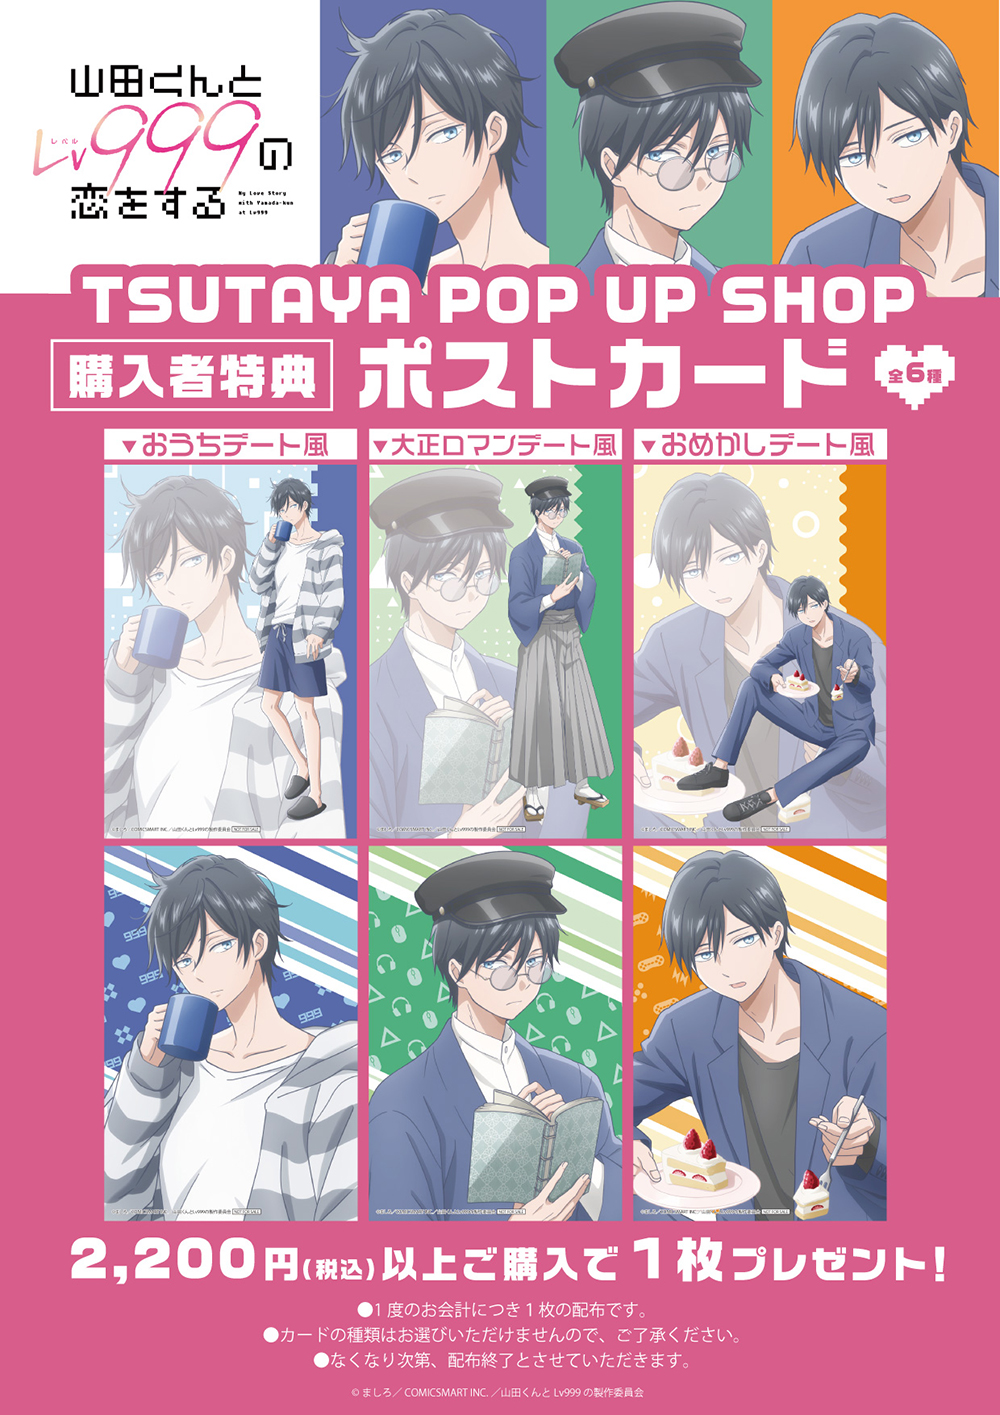 TVアニメ『山田くんとLv999の恋をする』POP UP SHOPがTSUTAYAにて開催